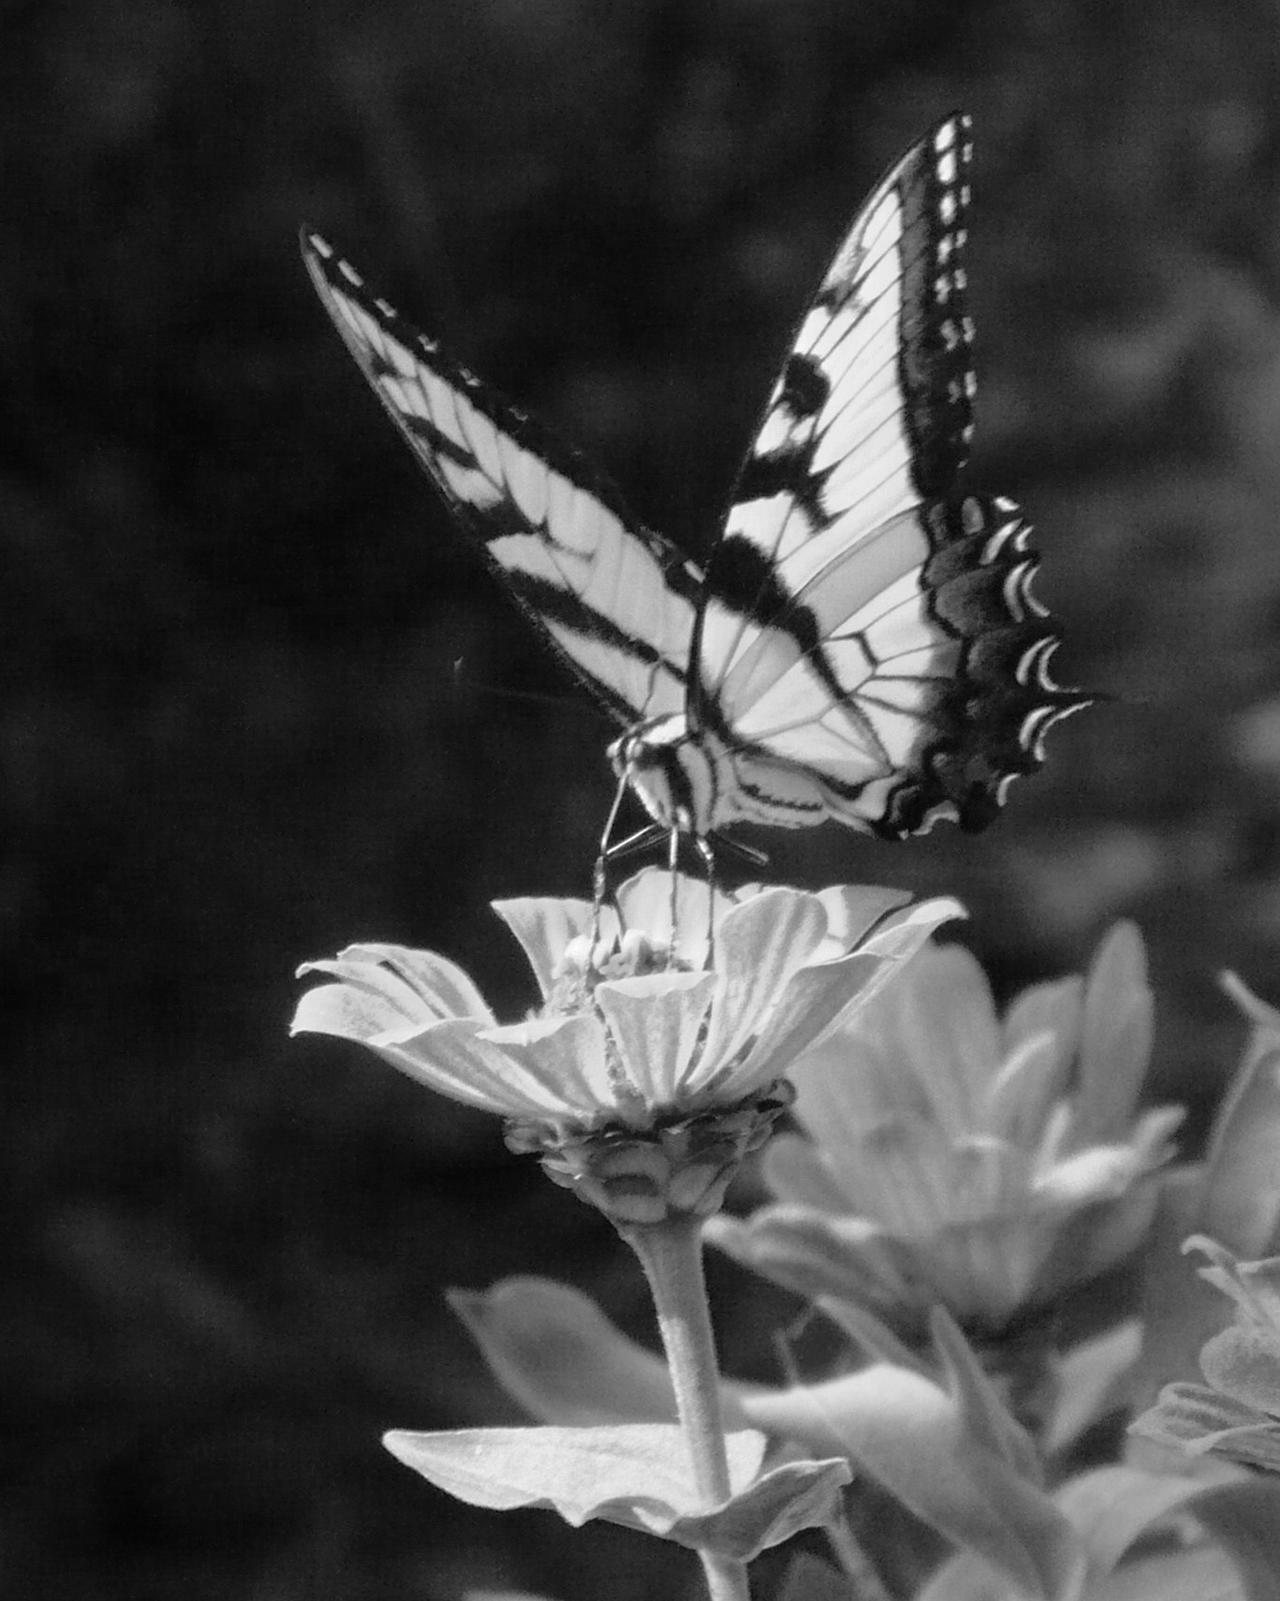 Black and White Butterfly by DeilspaceGrist on DeviantArt